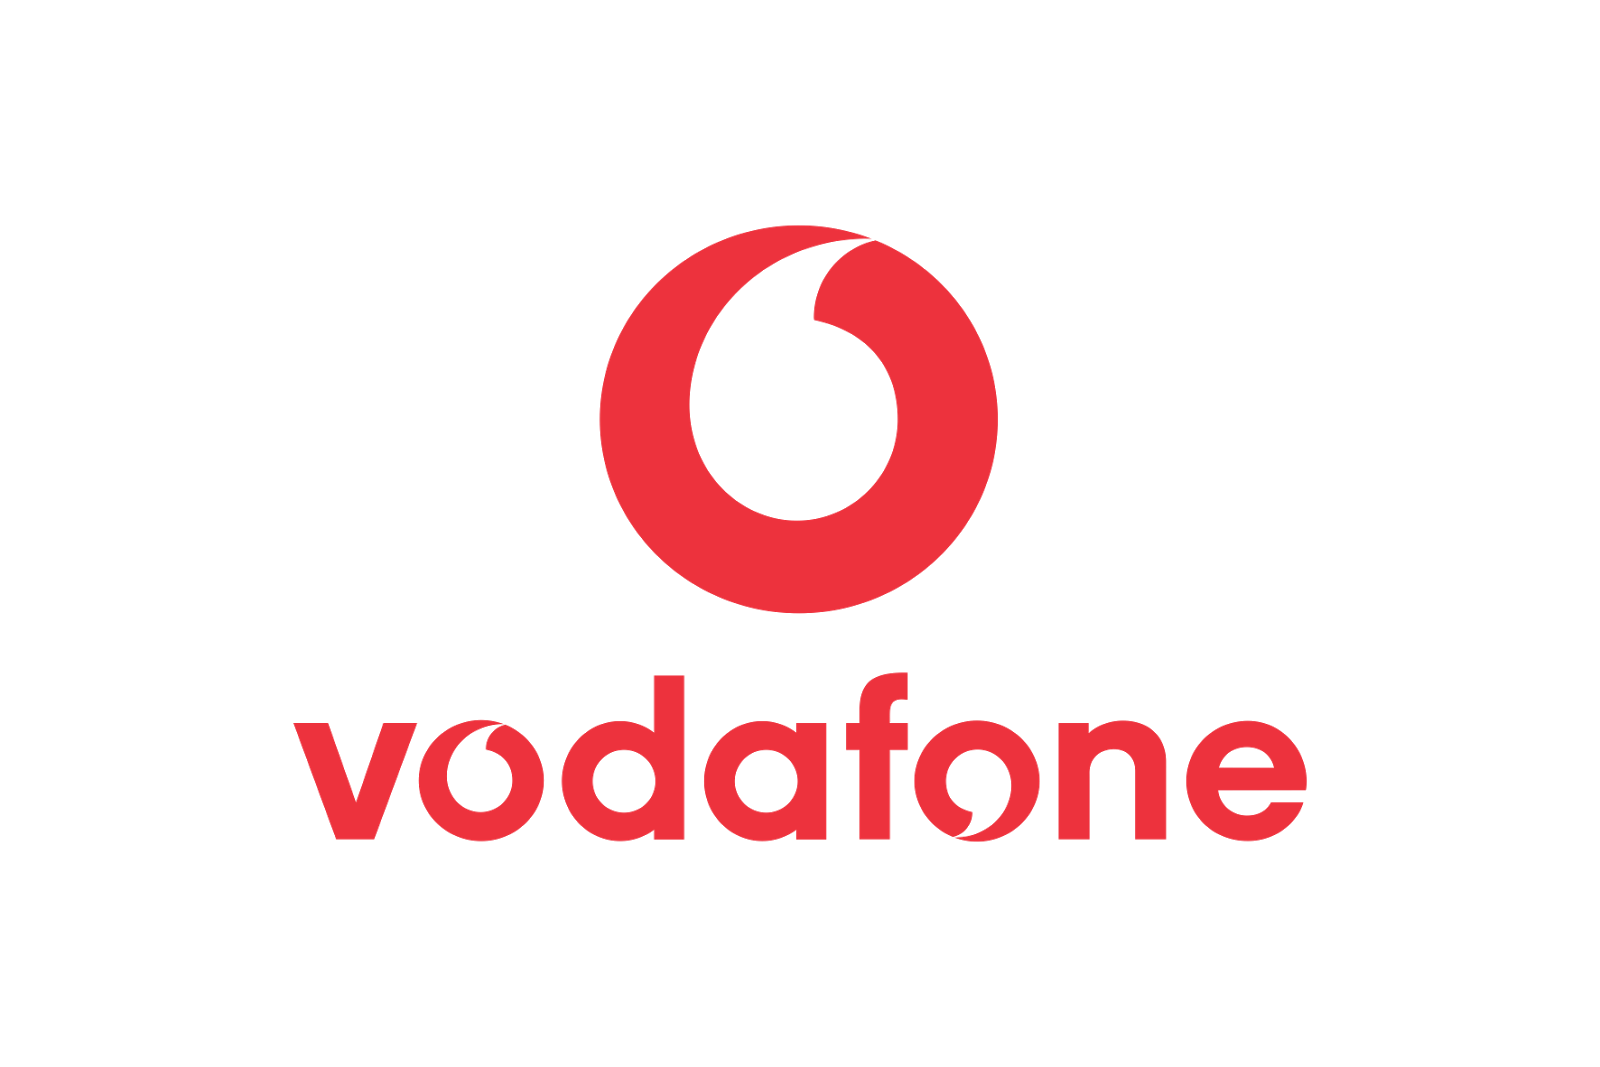 Vodafone Asset Management System